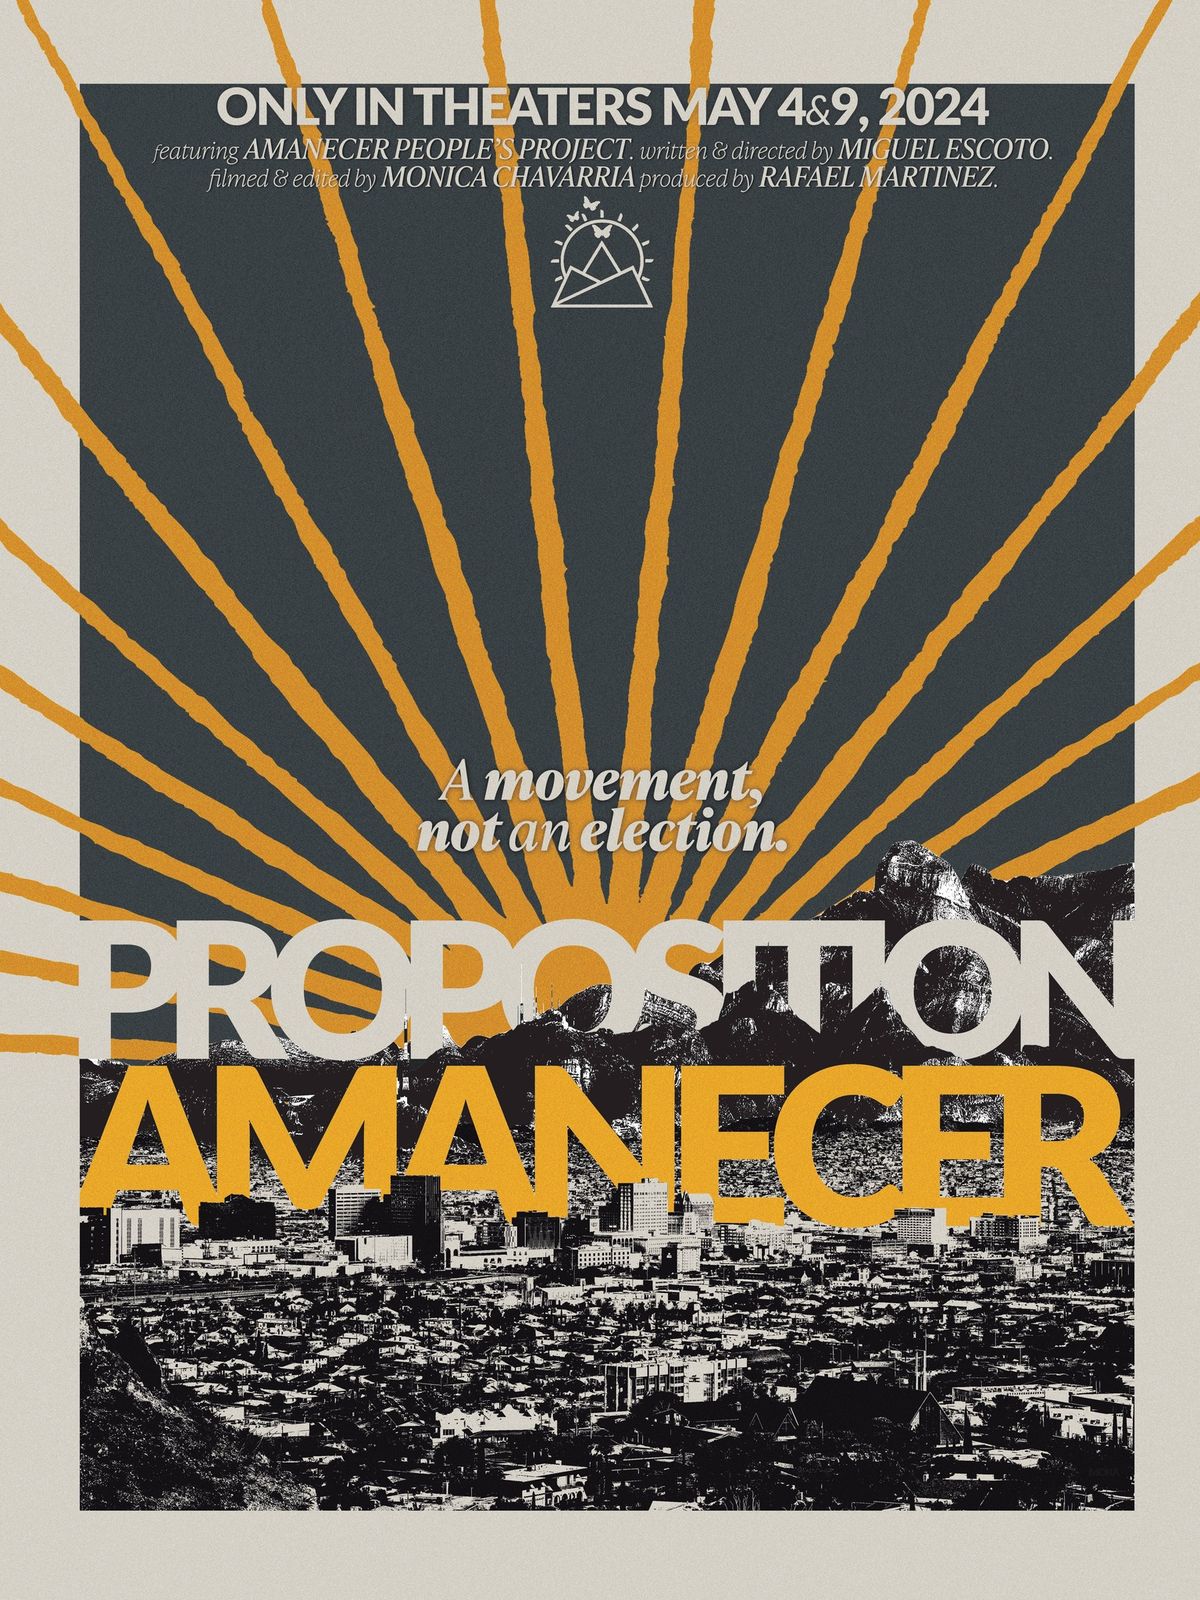 "Proposition Amanecer" (Bassett Place Cine 17)